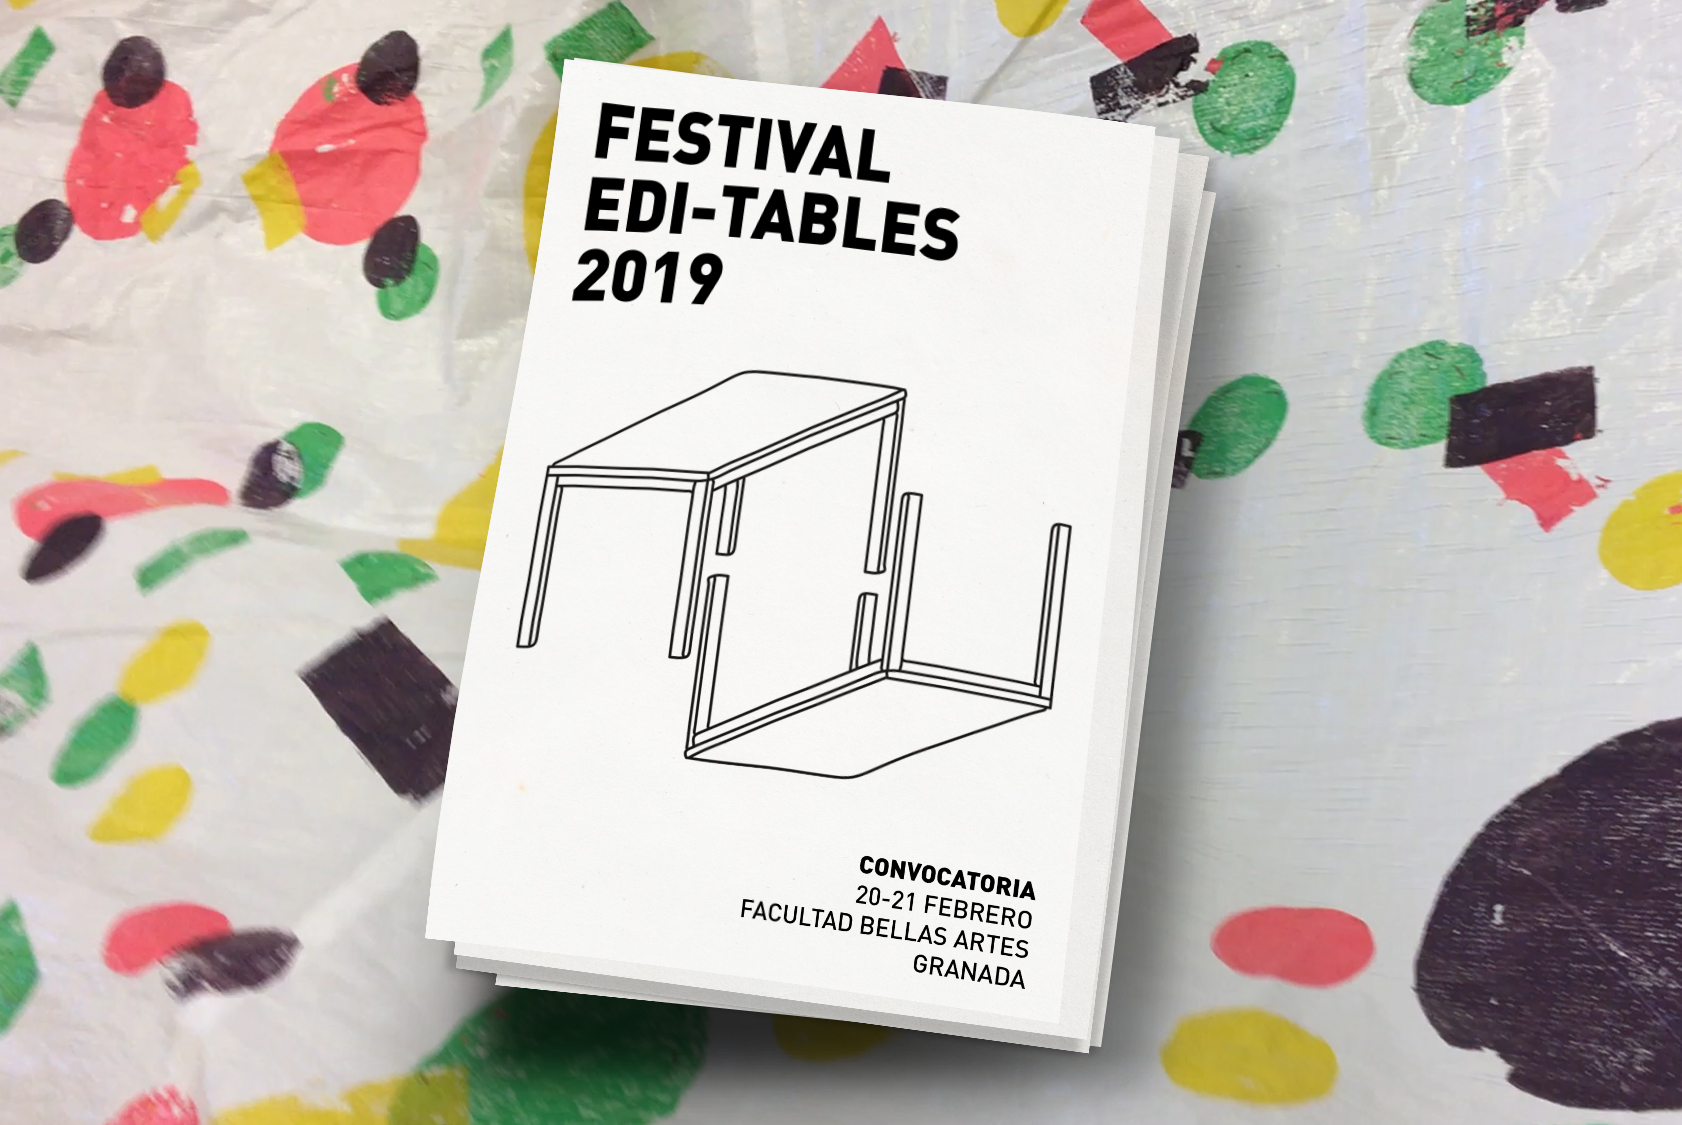 edi-tables